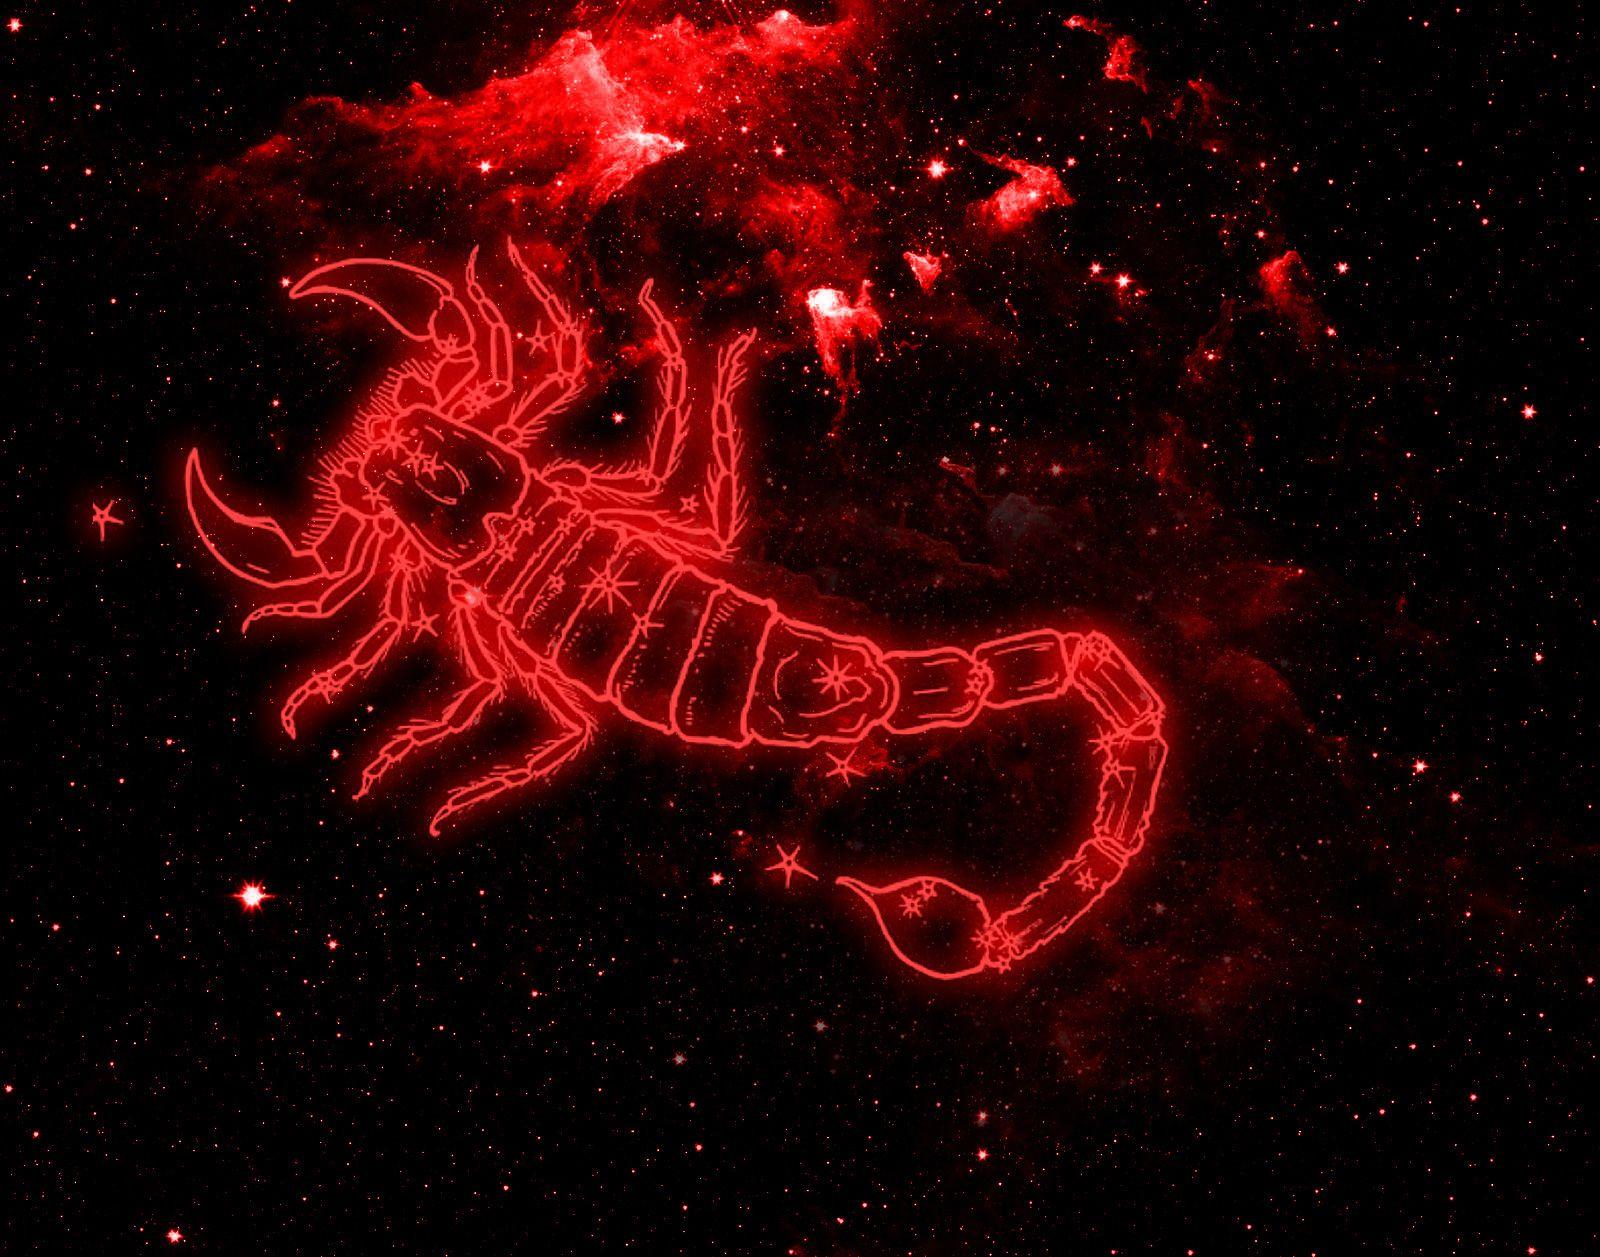 Scorpion Logo Wallpapers - Top Free Scorpion Logo Backgrounds ...